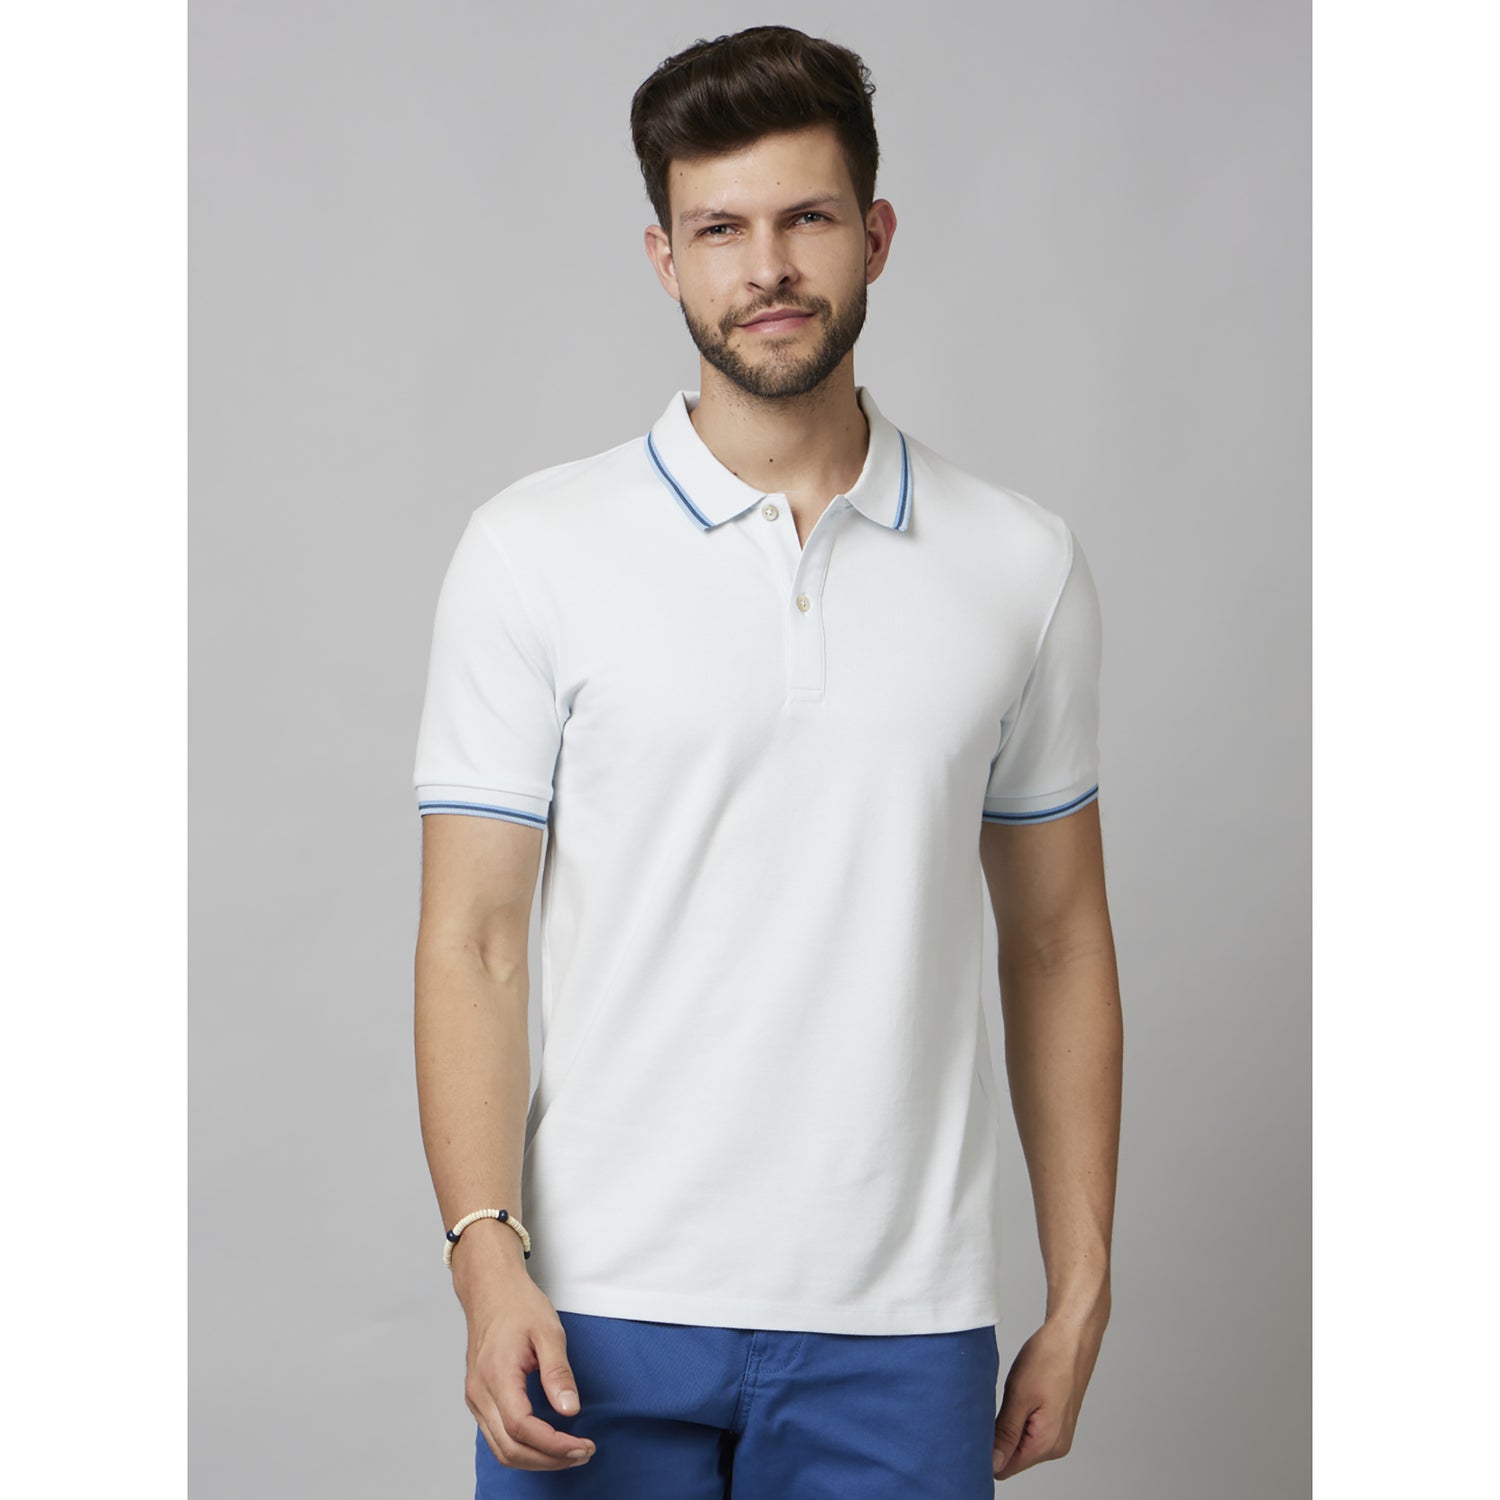 White Solid Short Sleeve Cotton Blend T-Shirts (DECOLRAYEB2)